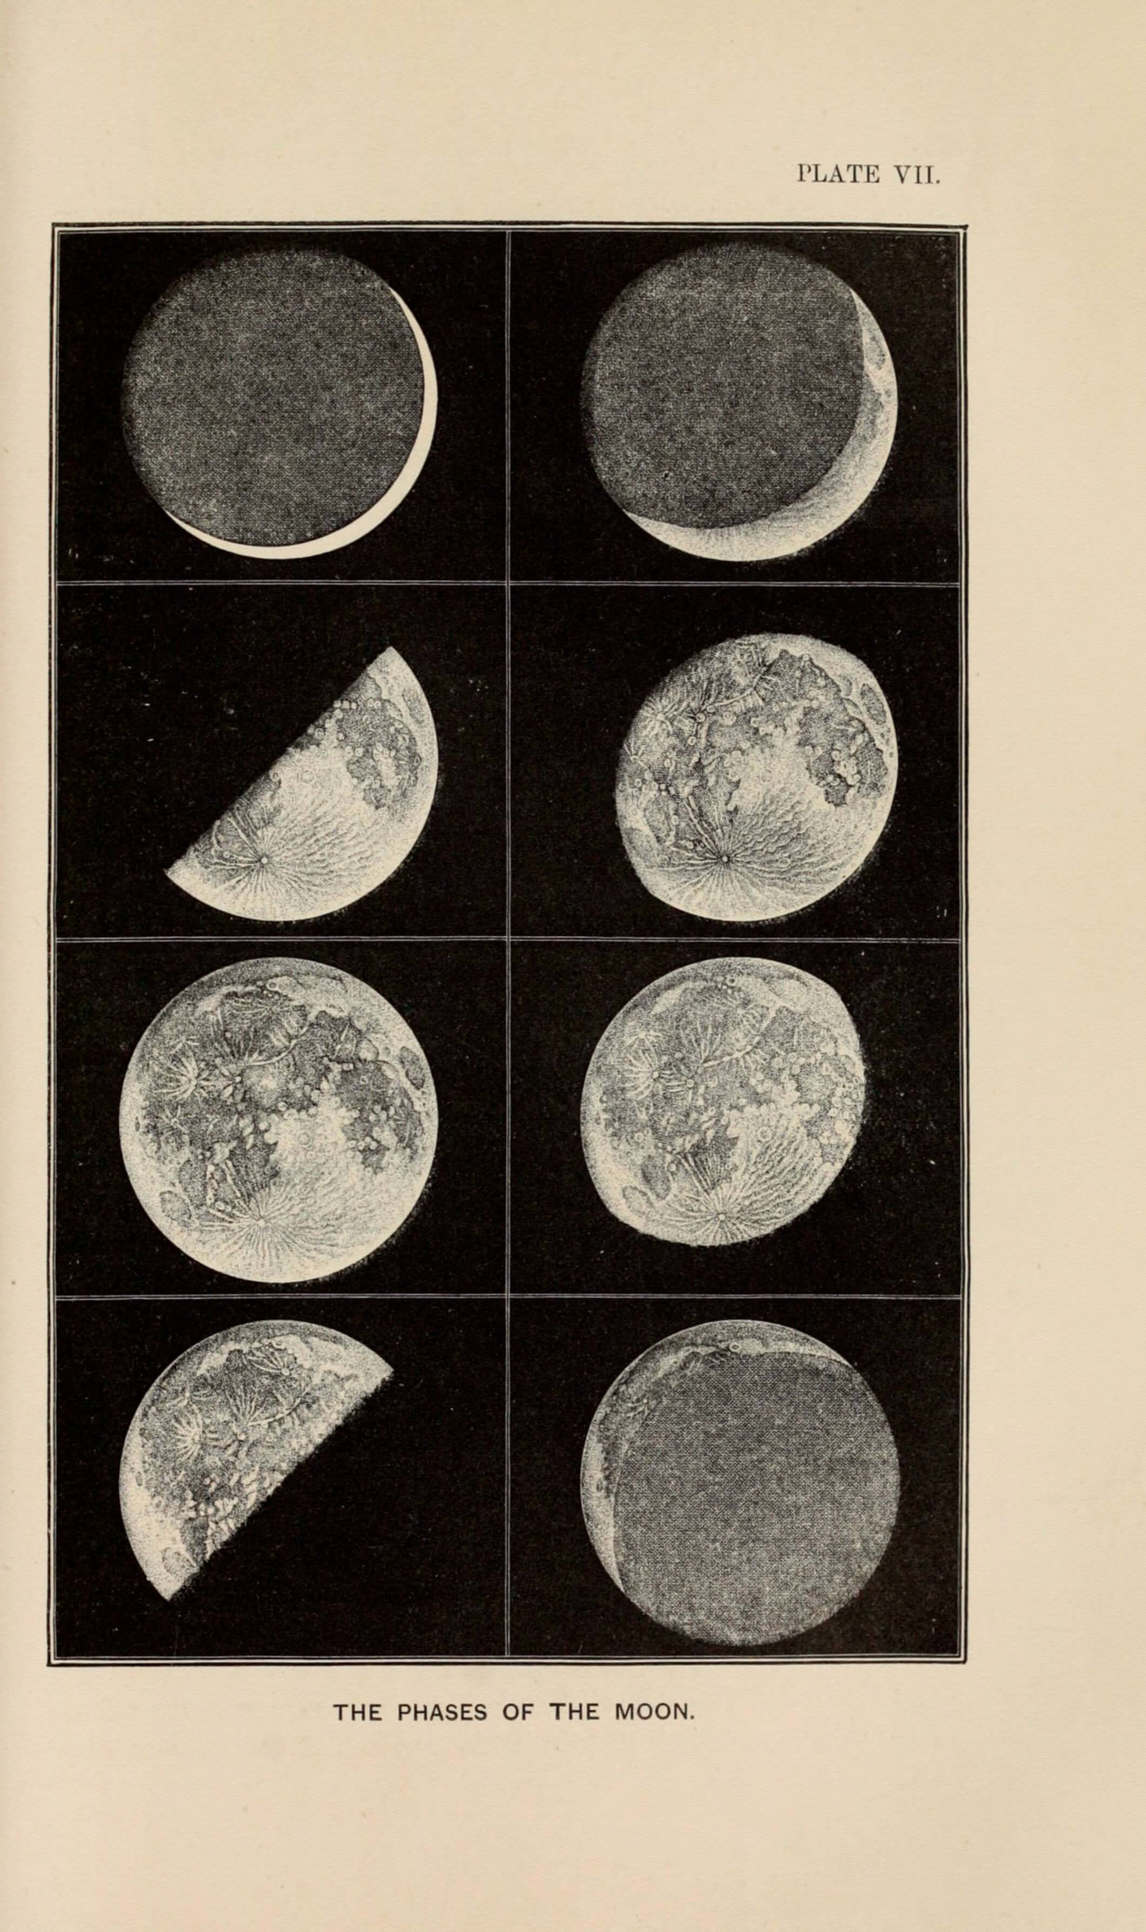 Amédée Guillemin, The Heavens: An Illustrated Handbook of Popular Astronomy, 1871.